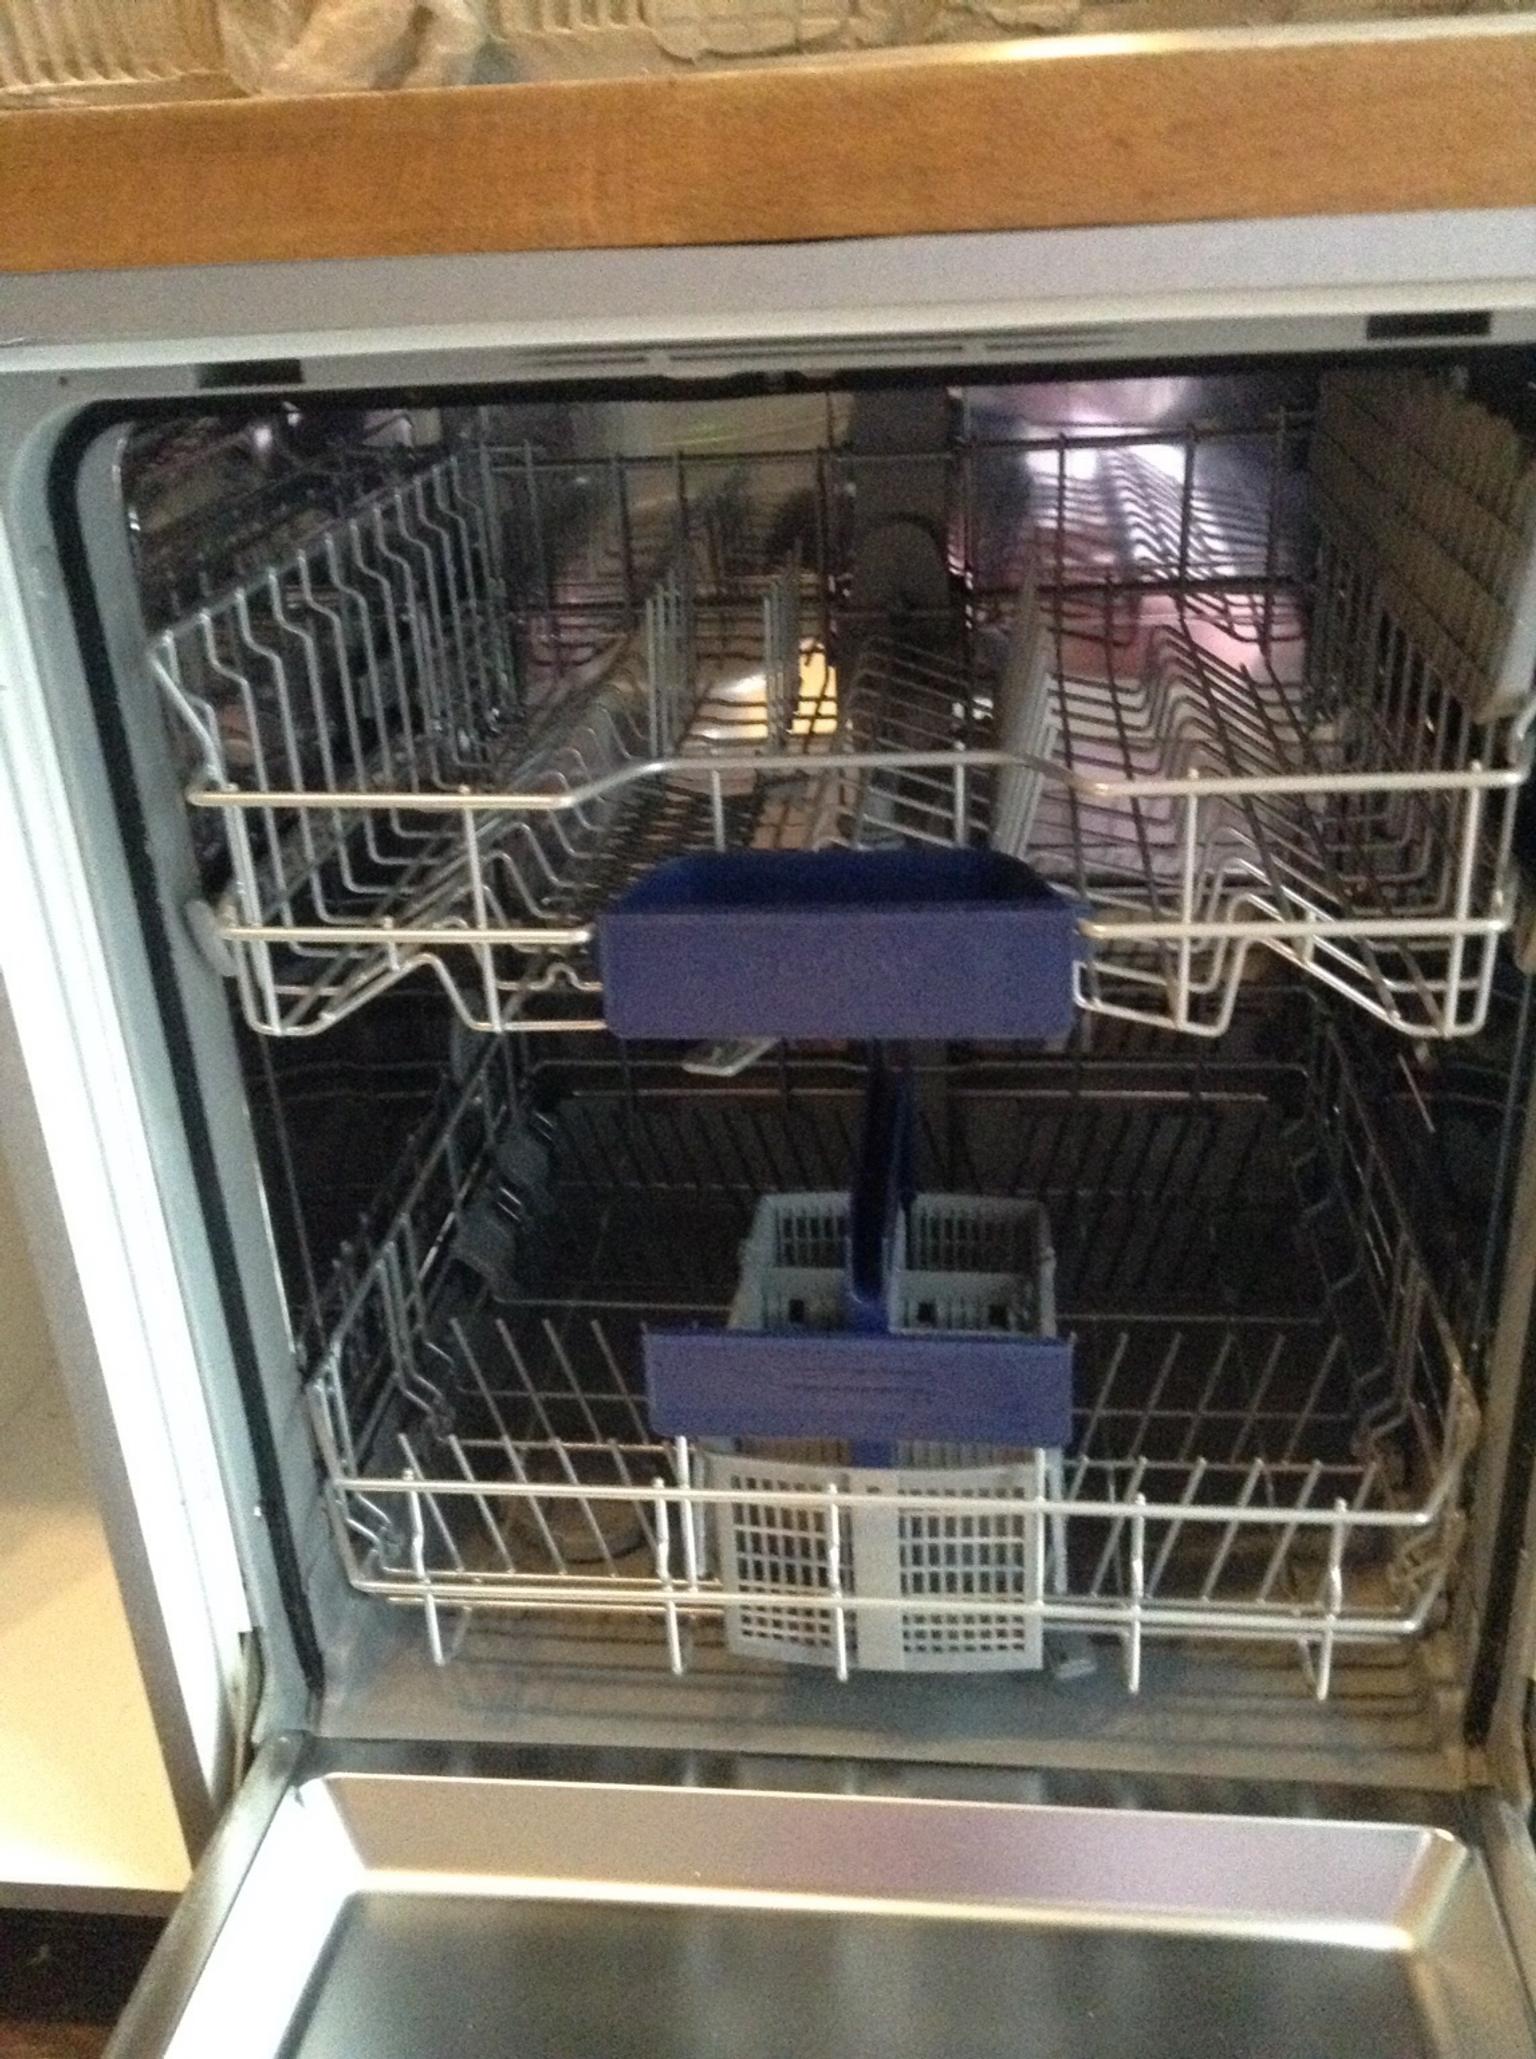 siemens dishwasher sn65m031gb